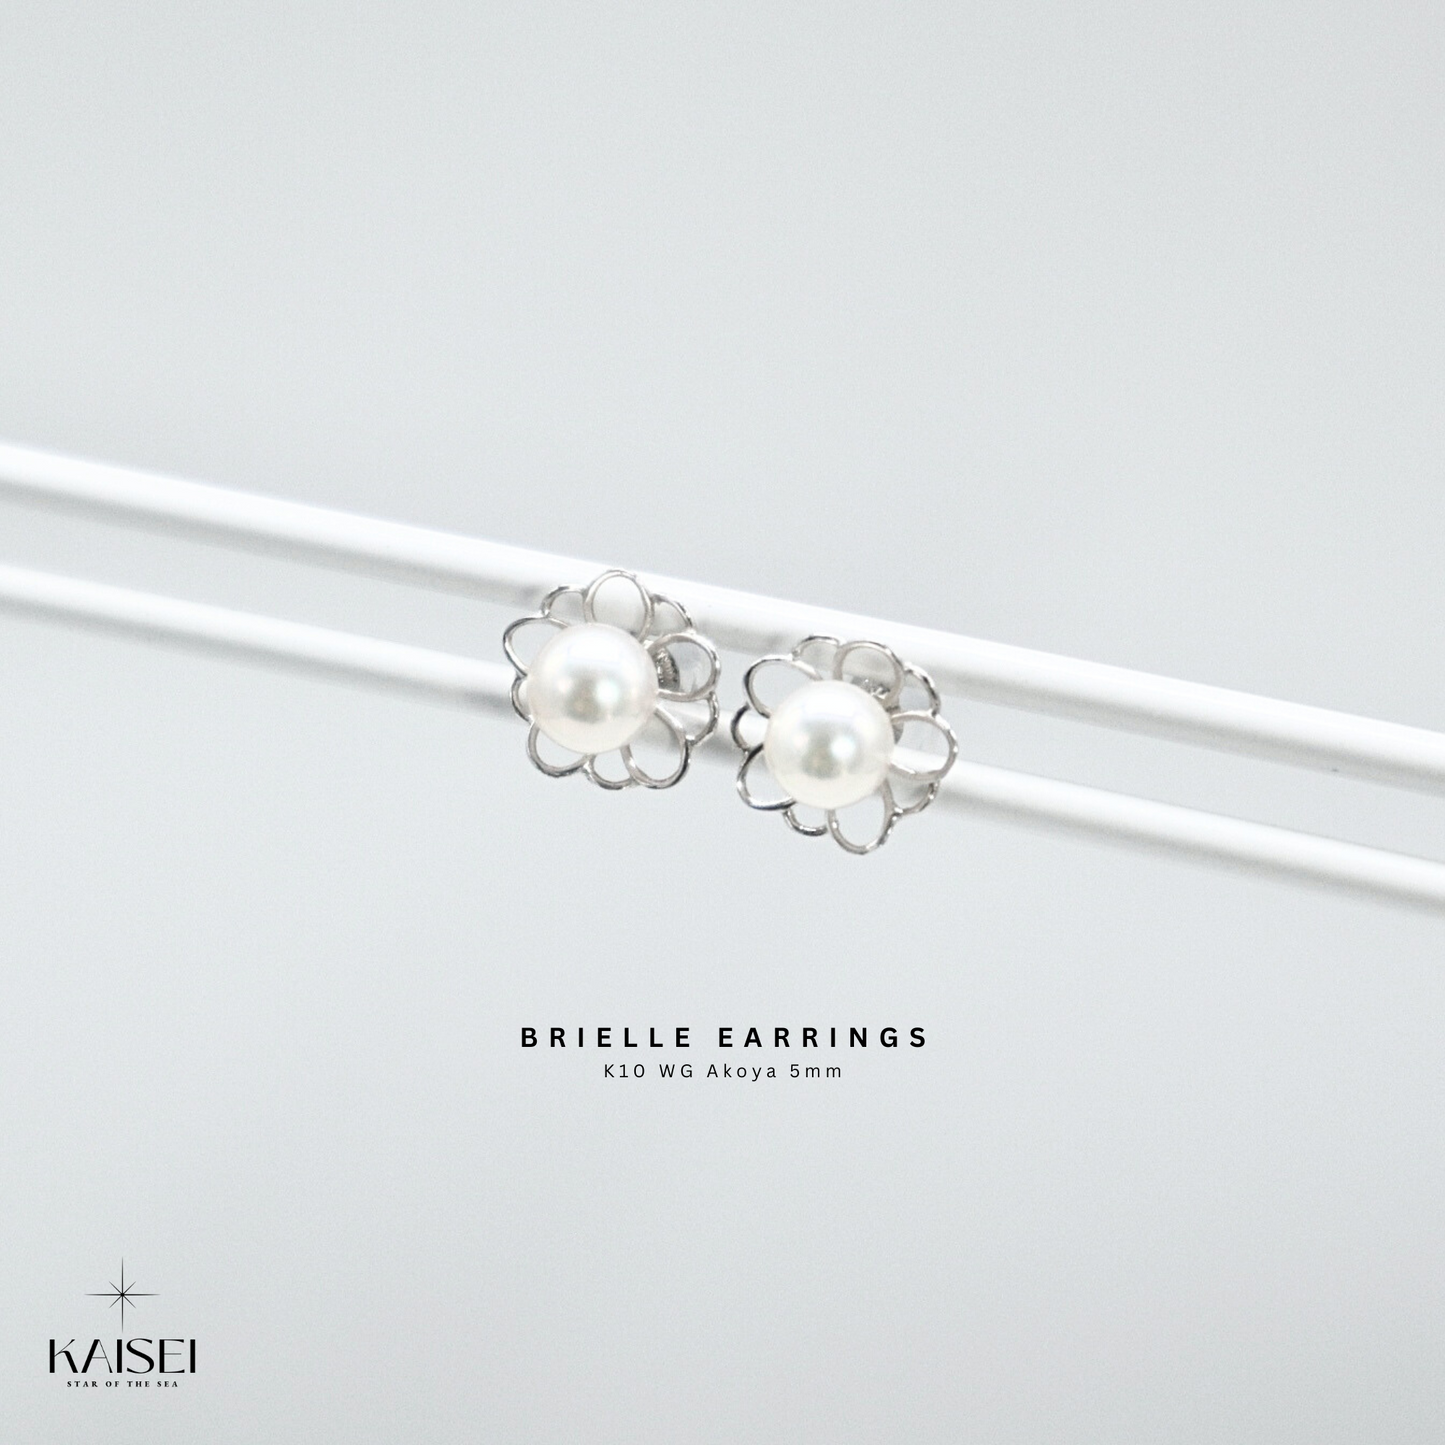 Kaisei Pearl - Brielle Earrings K10 White Gold Akoya Pearl 5mm Japanese Jewelry